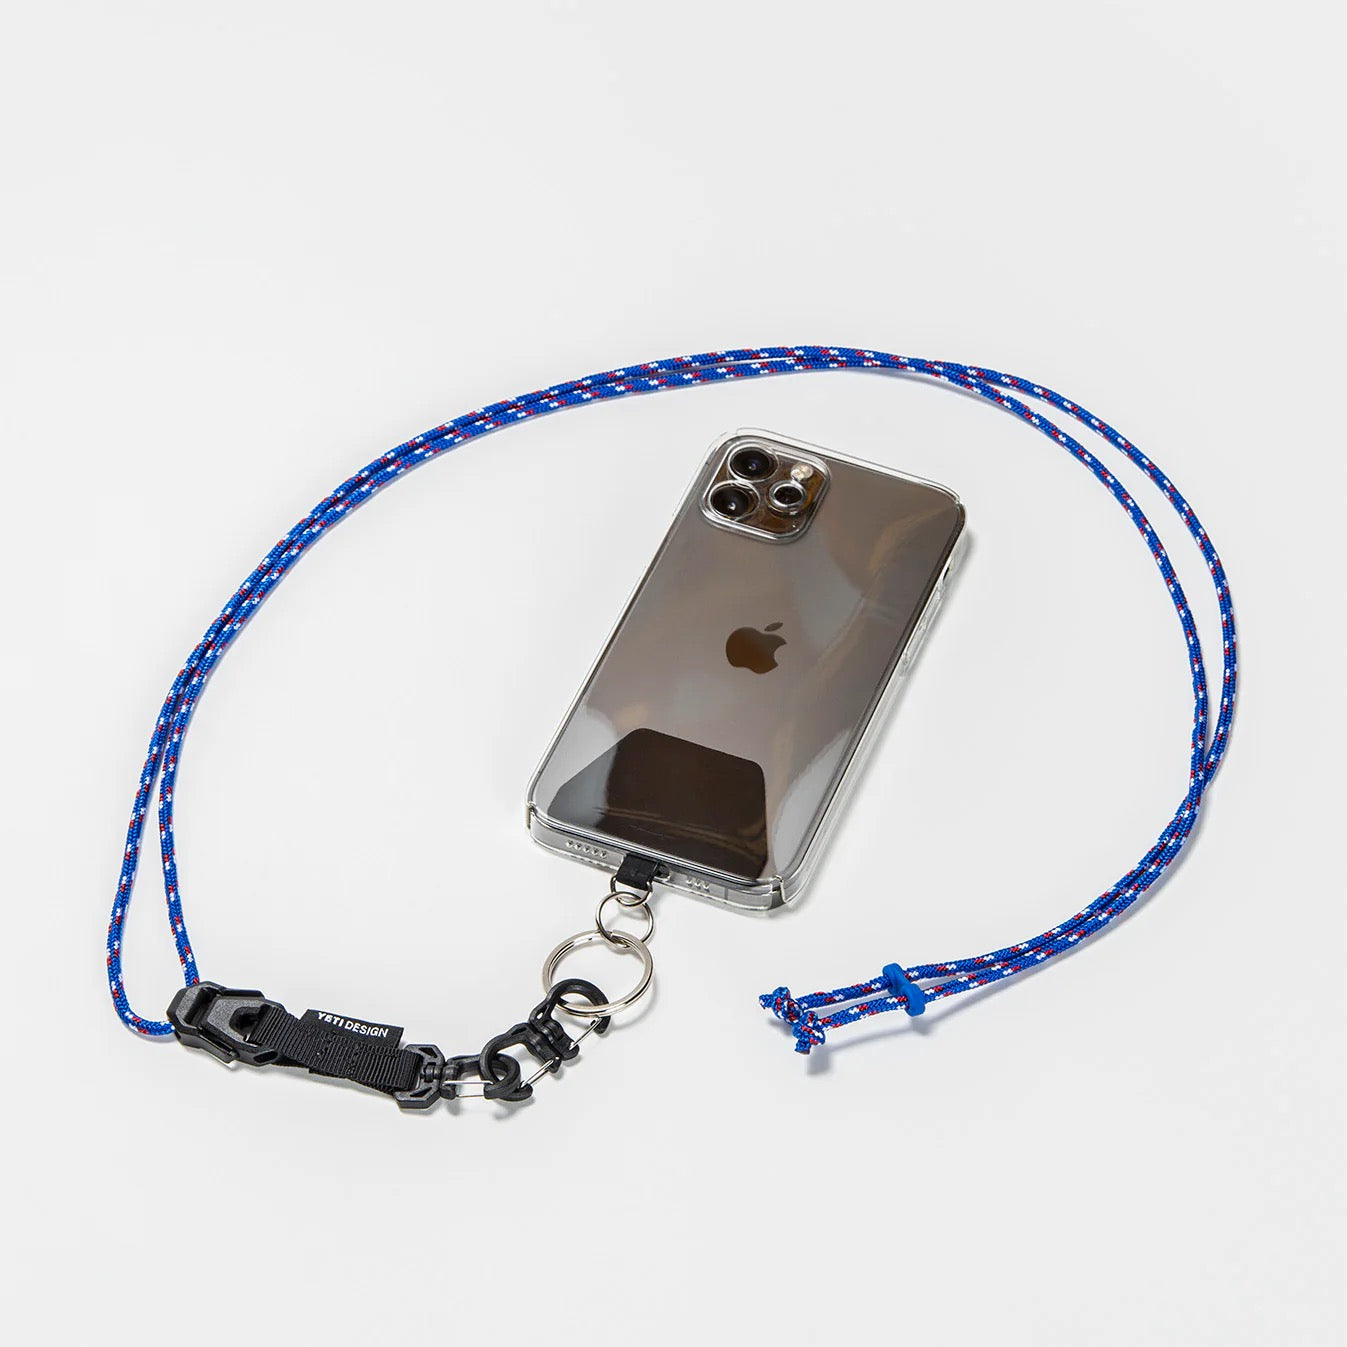 Single Swivel Mobile Phone Strap with Attachment